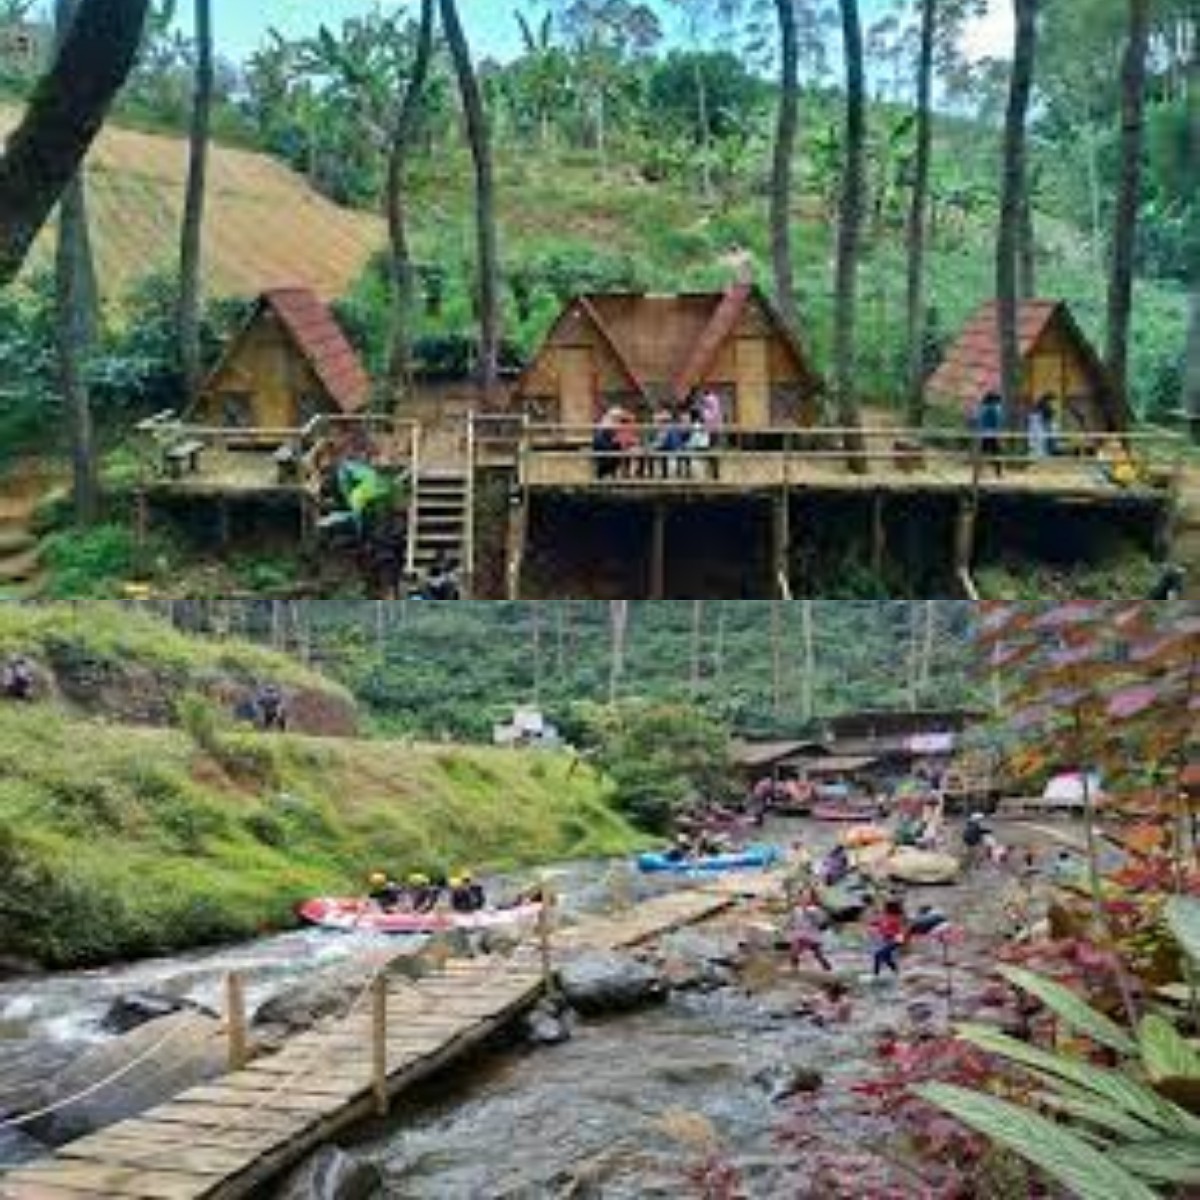 Suguhkan Wisata Alam yang Tenang! Inilah Objek Wisata Murah Meriah di Desa Singkur 